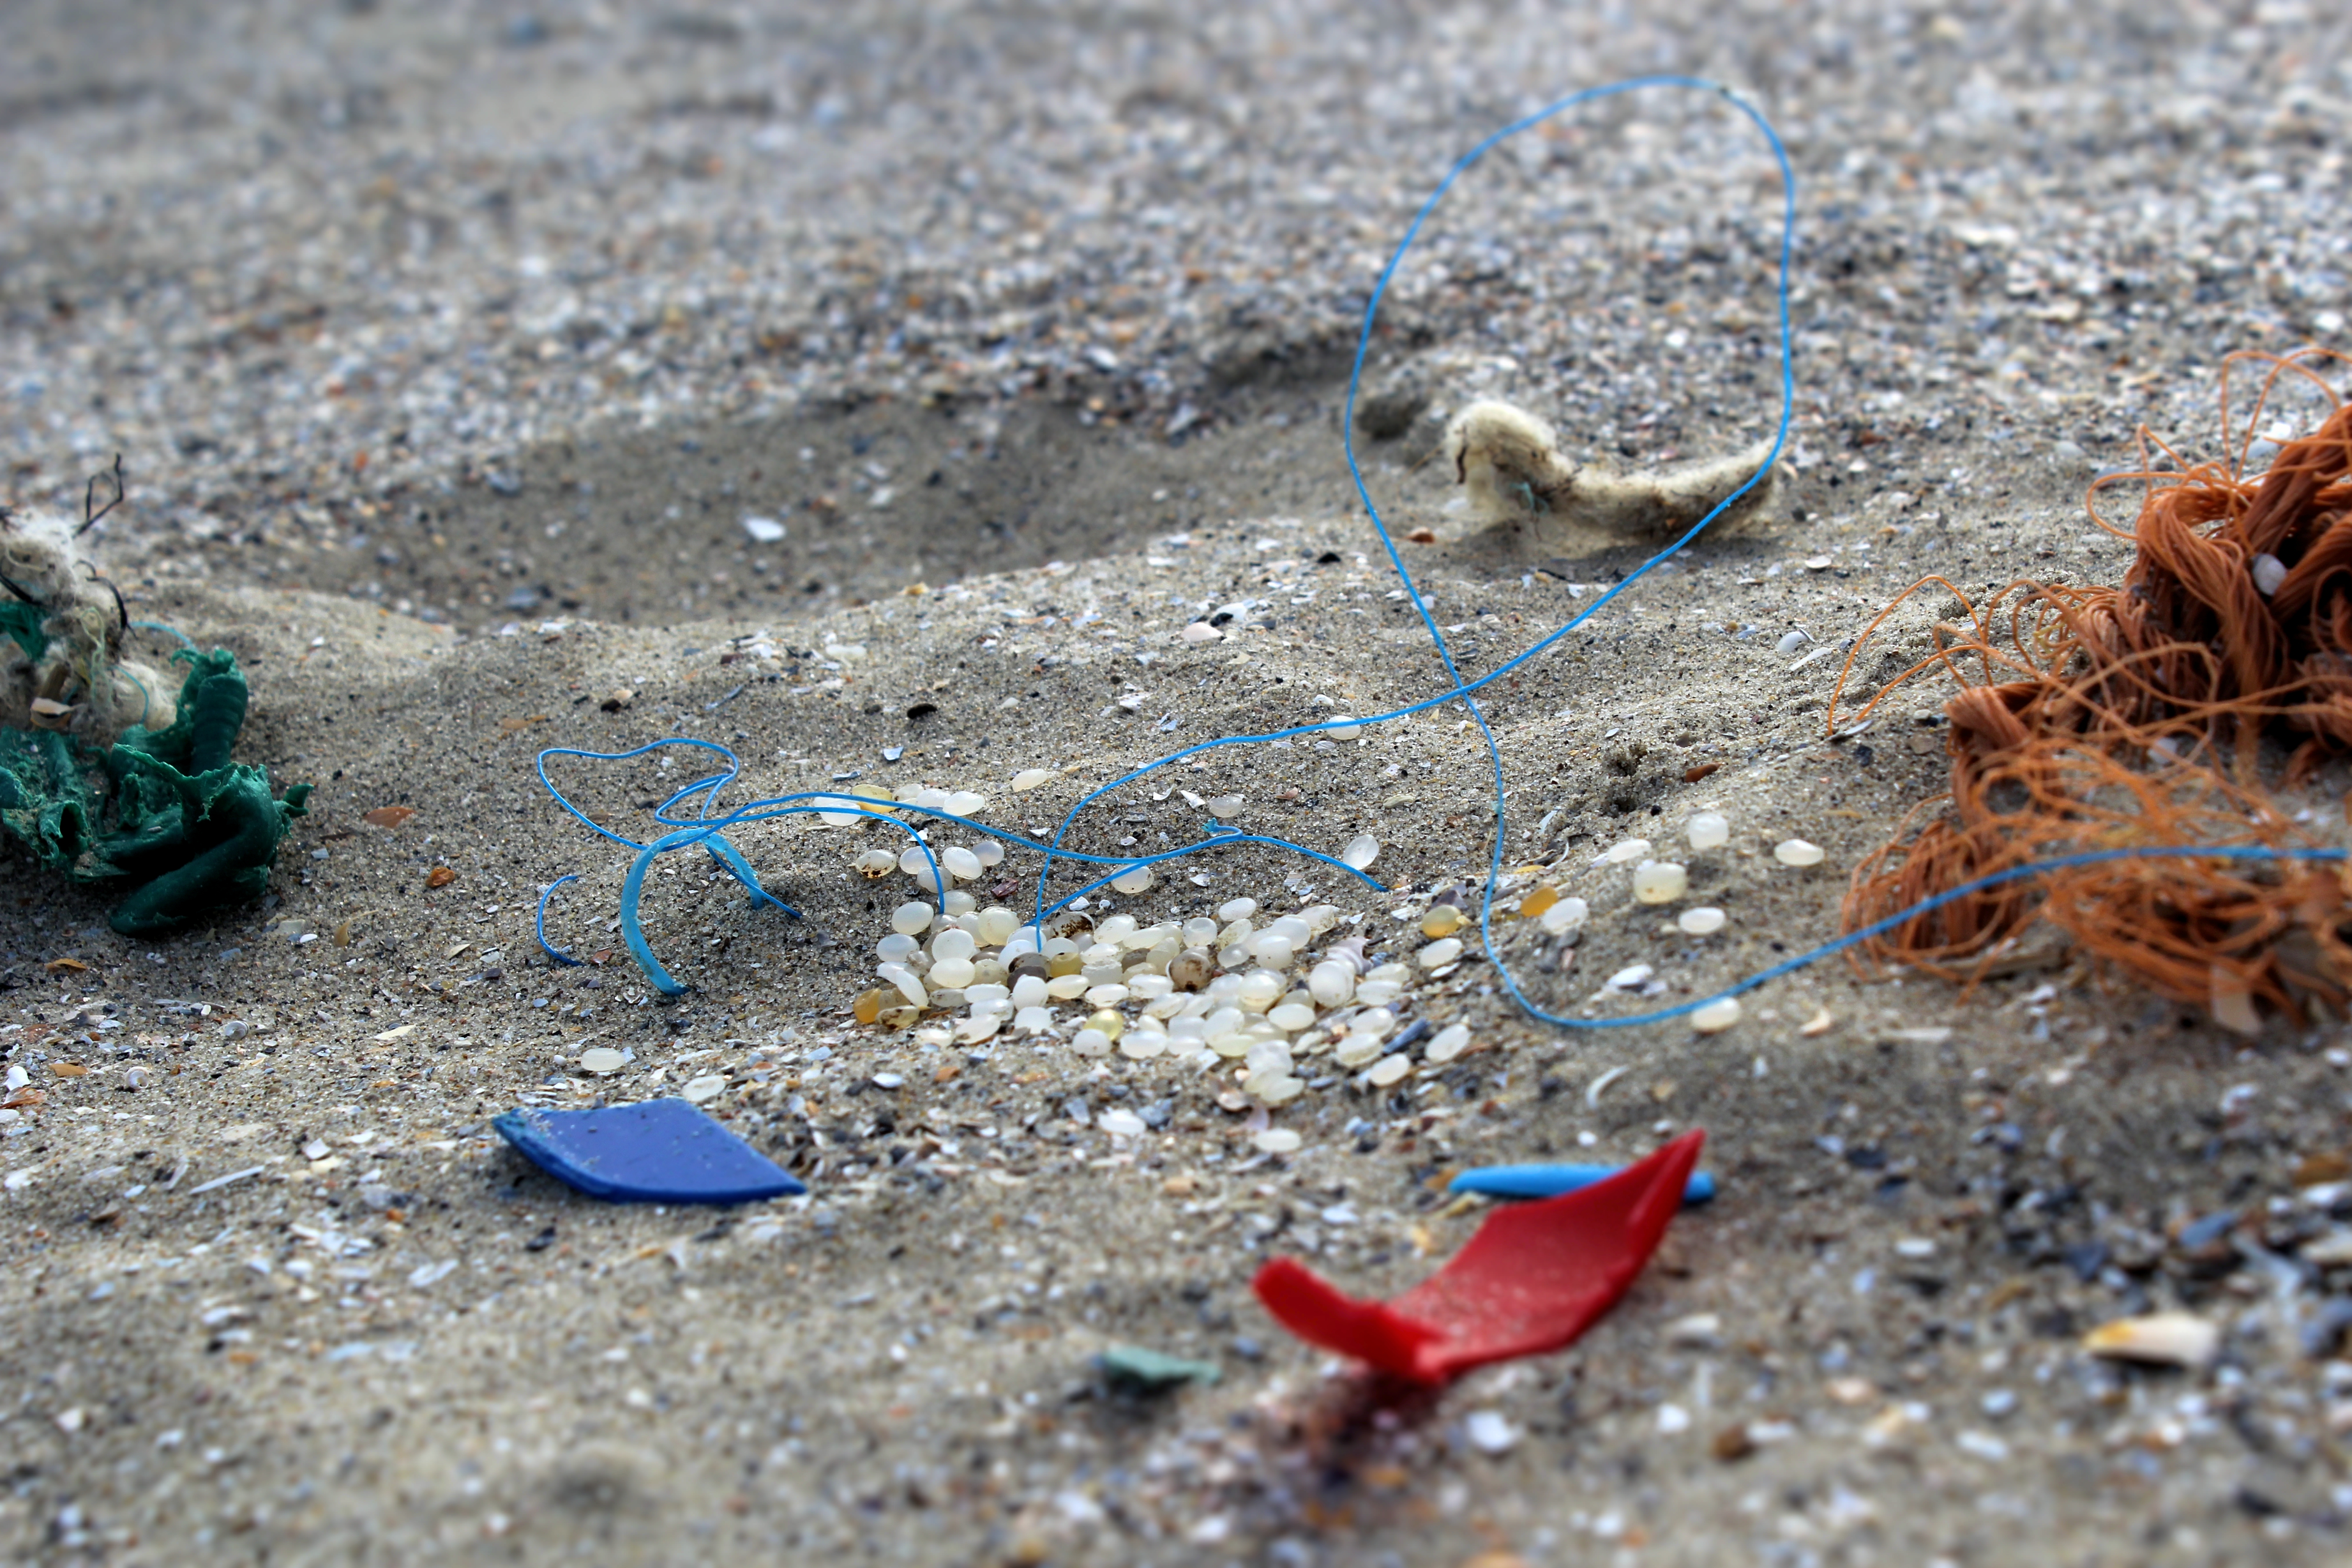 Plastic debris. Time to turn the tide ...